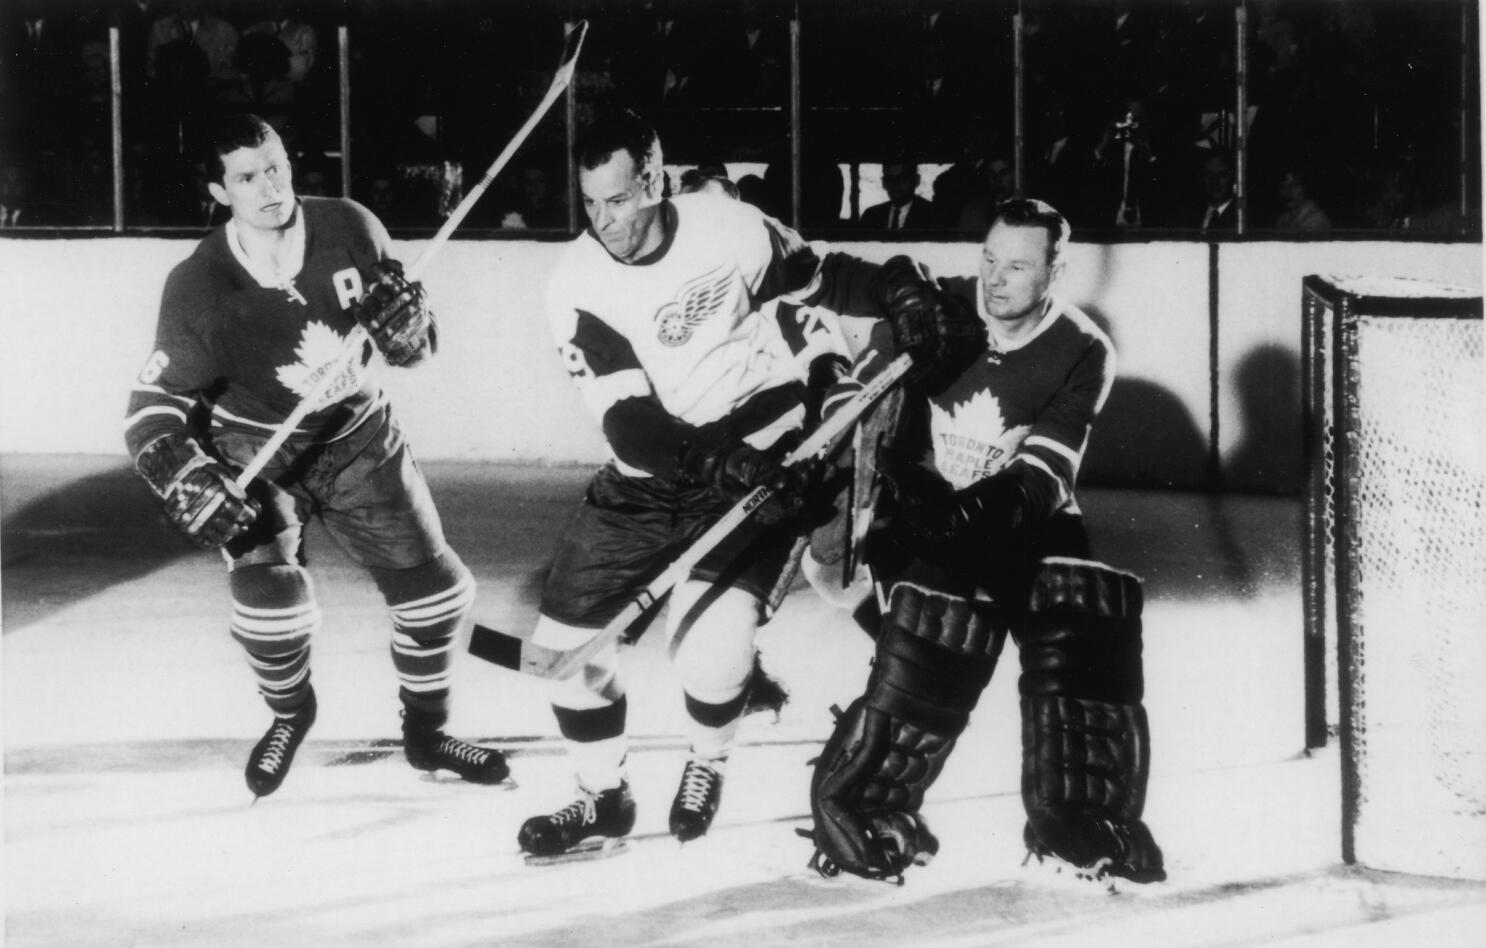 Gordie Howe impacted the game of hockey like no other